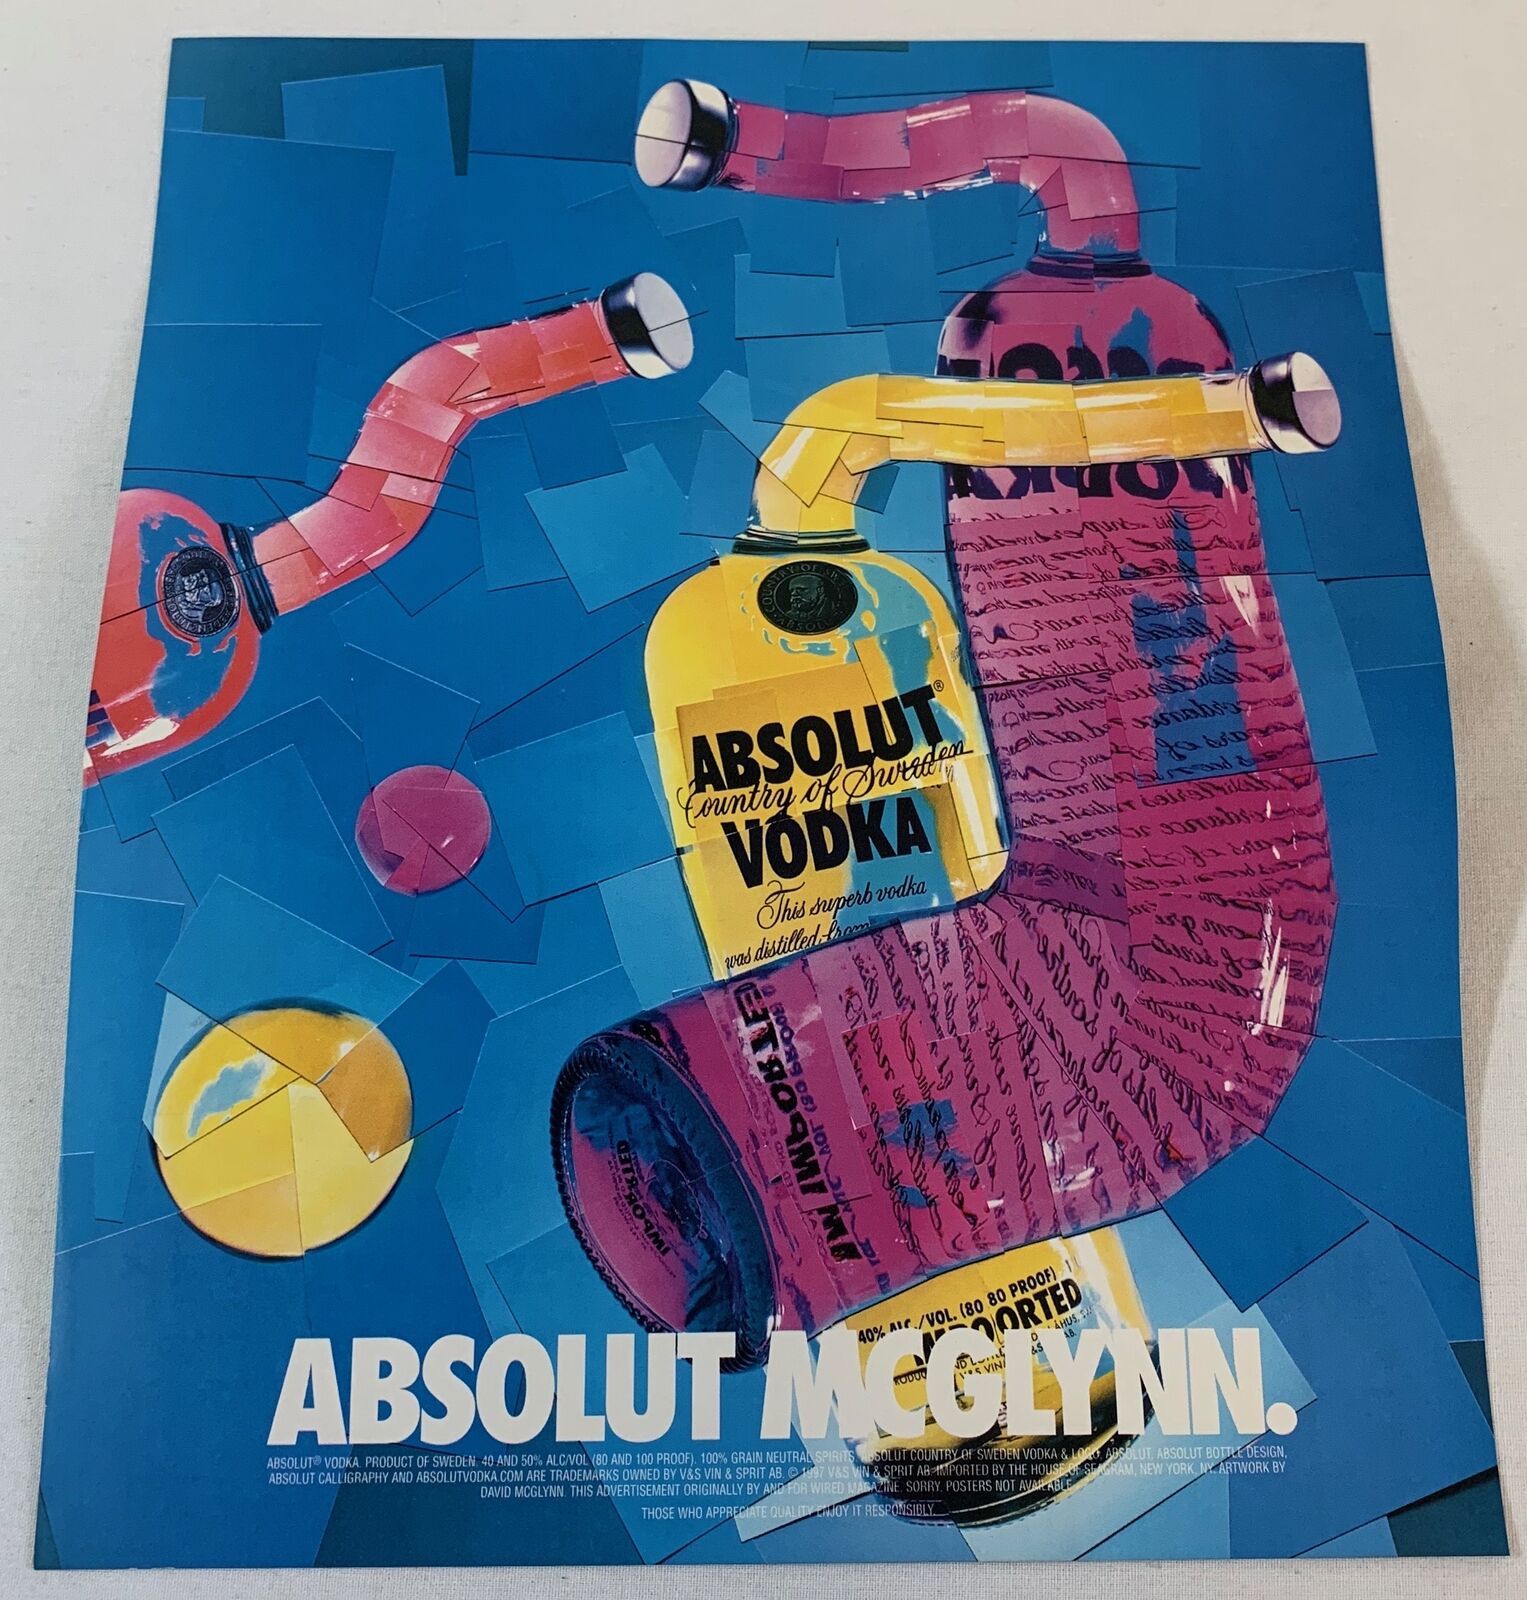 1997 Absolut vodka ad page ~ ABSOLUT McGLYNN ~ David McGlynn ~ 9x10.5